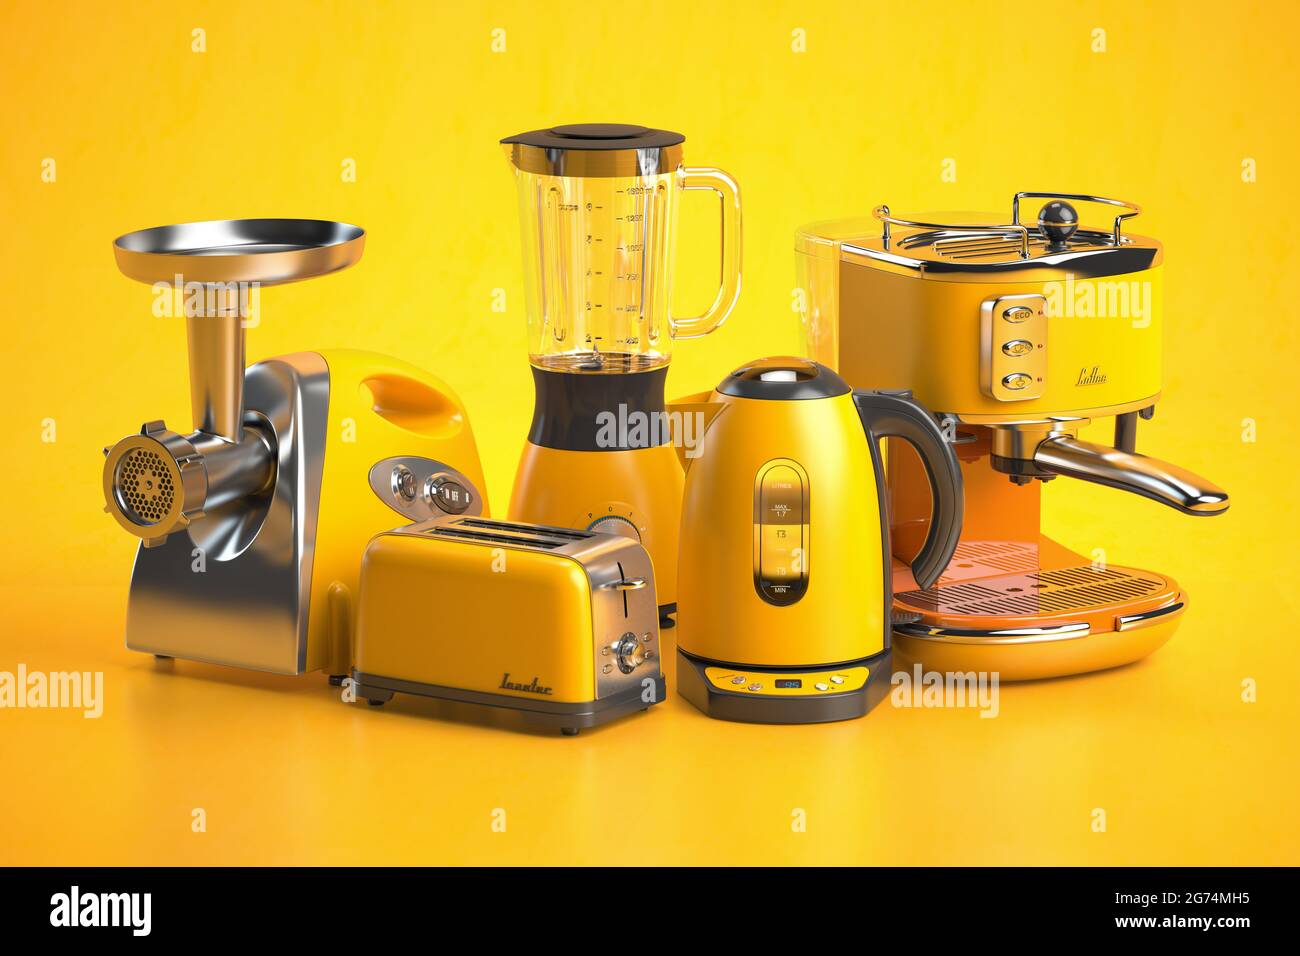 Yellow kitchen appliances on yellow background. Set of home kitchen technics. 3d illustration Stock Photo